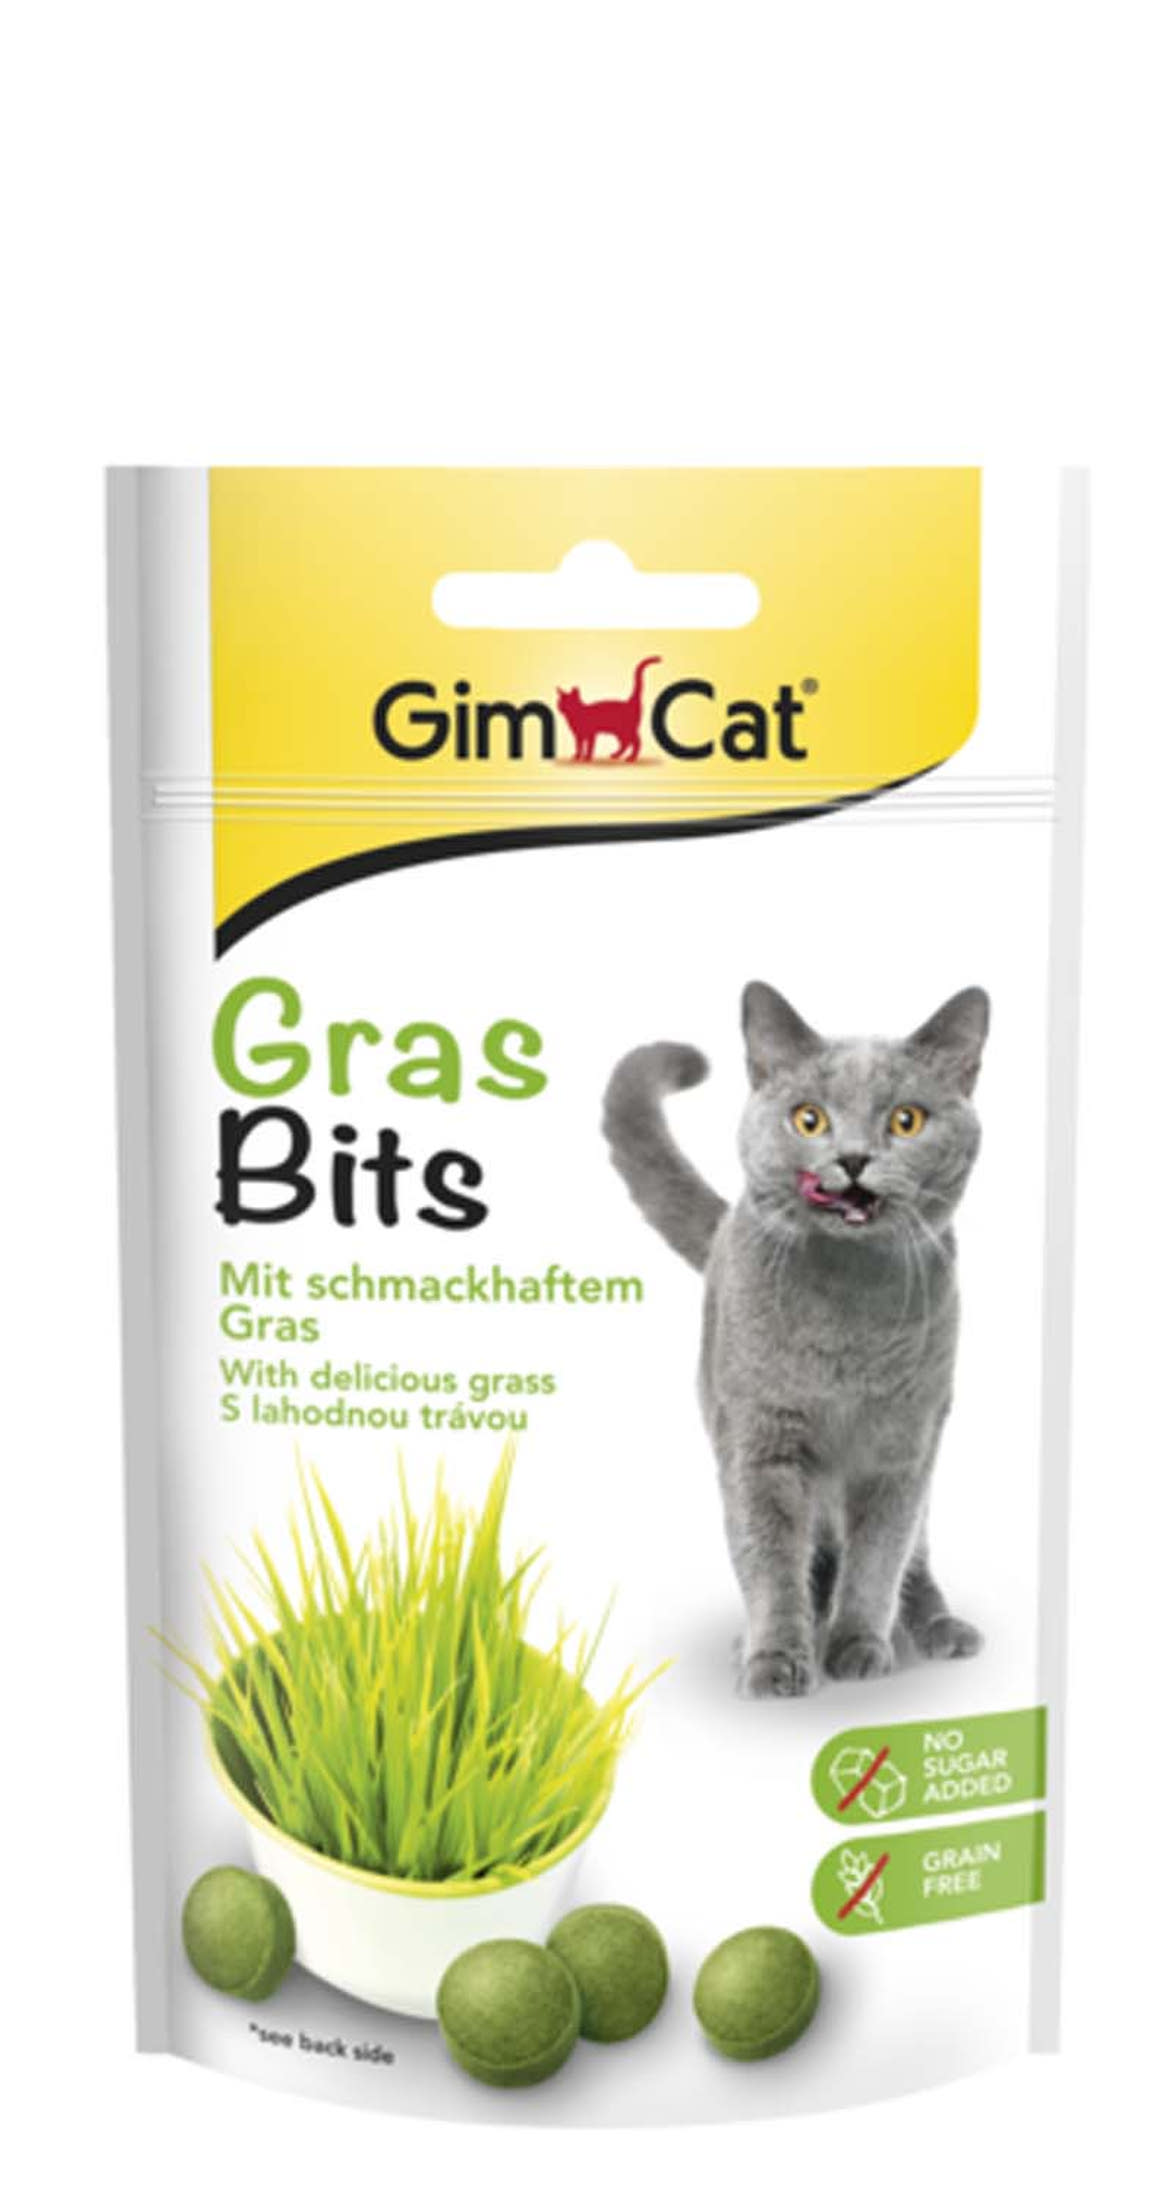 GimCat Gras Bits macska jutalomfalat zöld fű